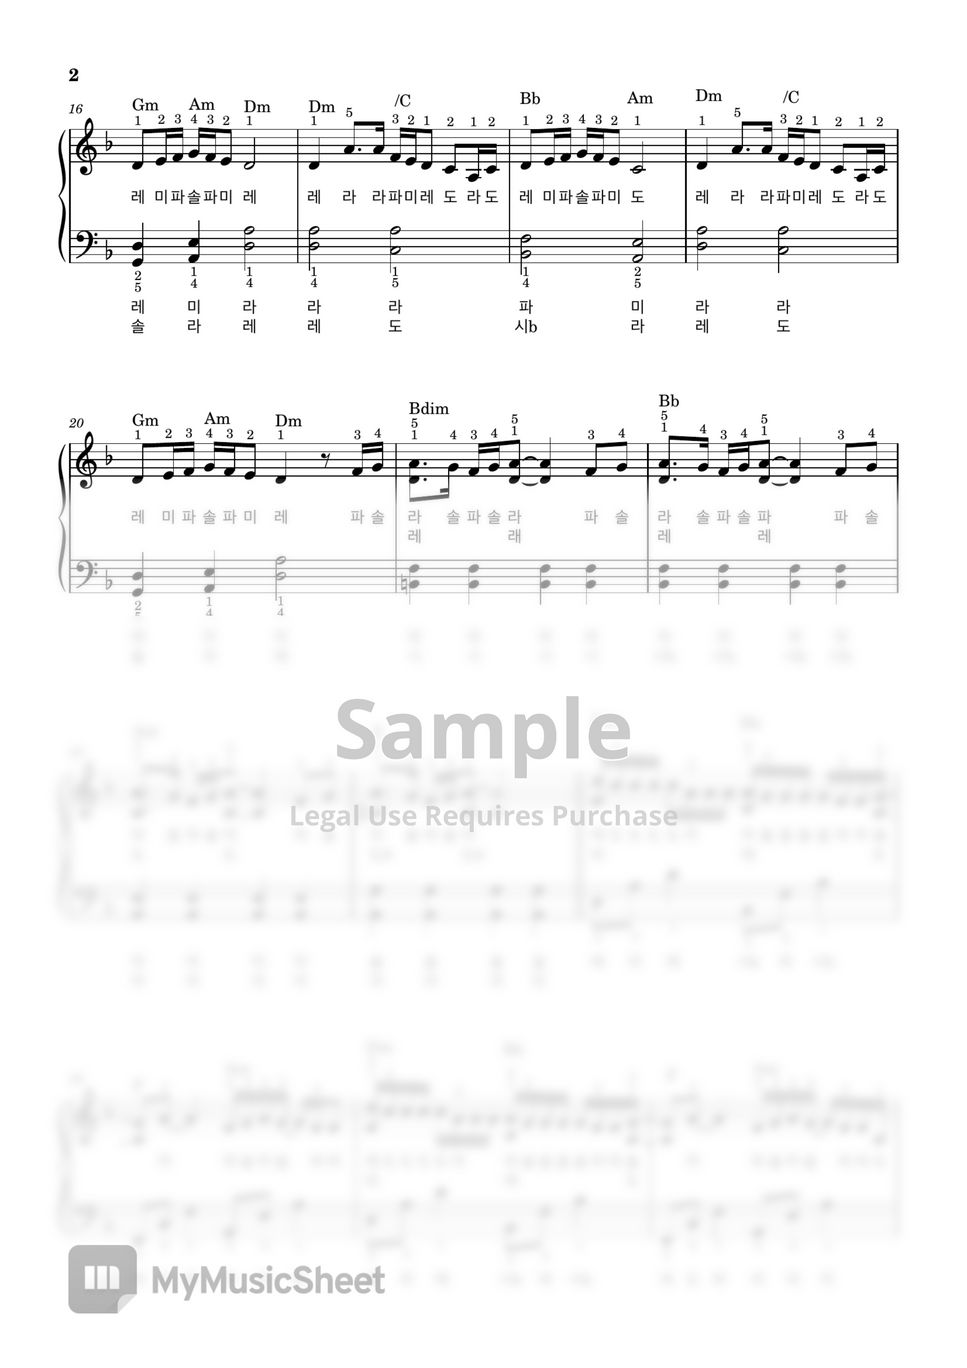 RADWIMPS - 스즈메의 문단속 OST_참새 (계이름,손가락번호) by 피아노클라우드(piano cloud)